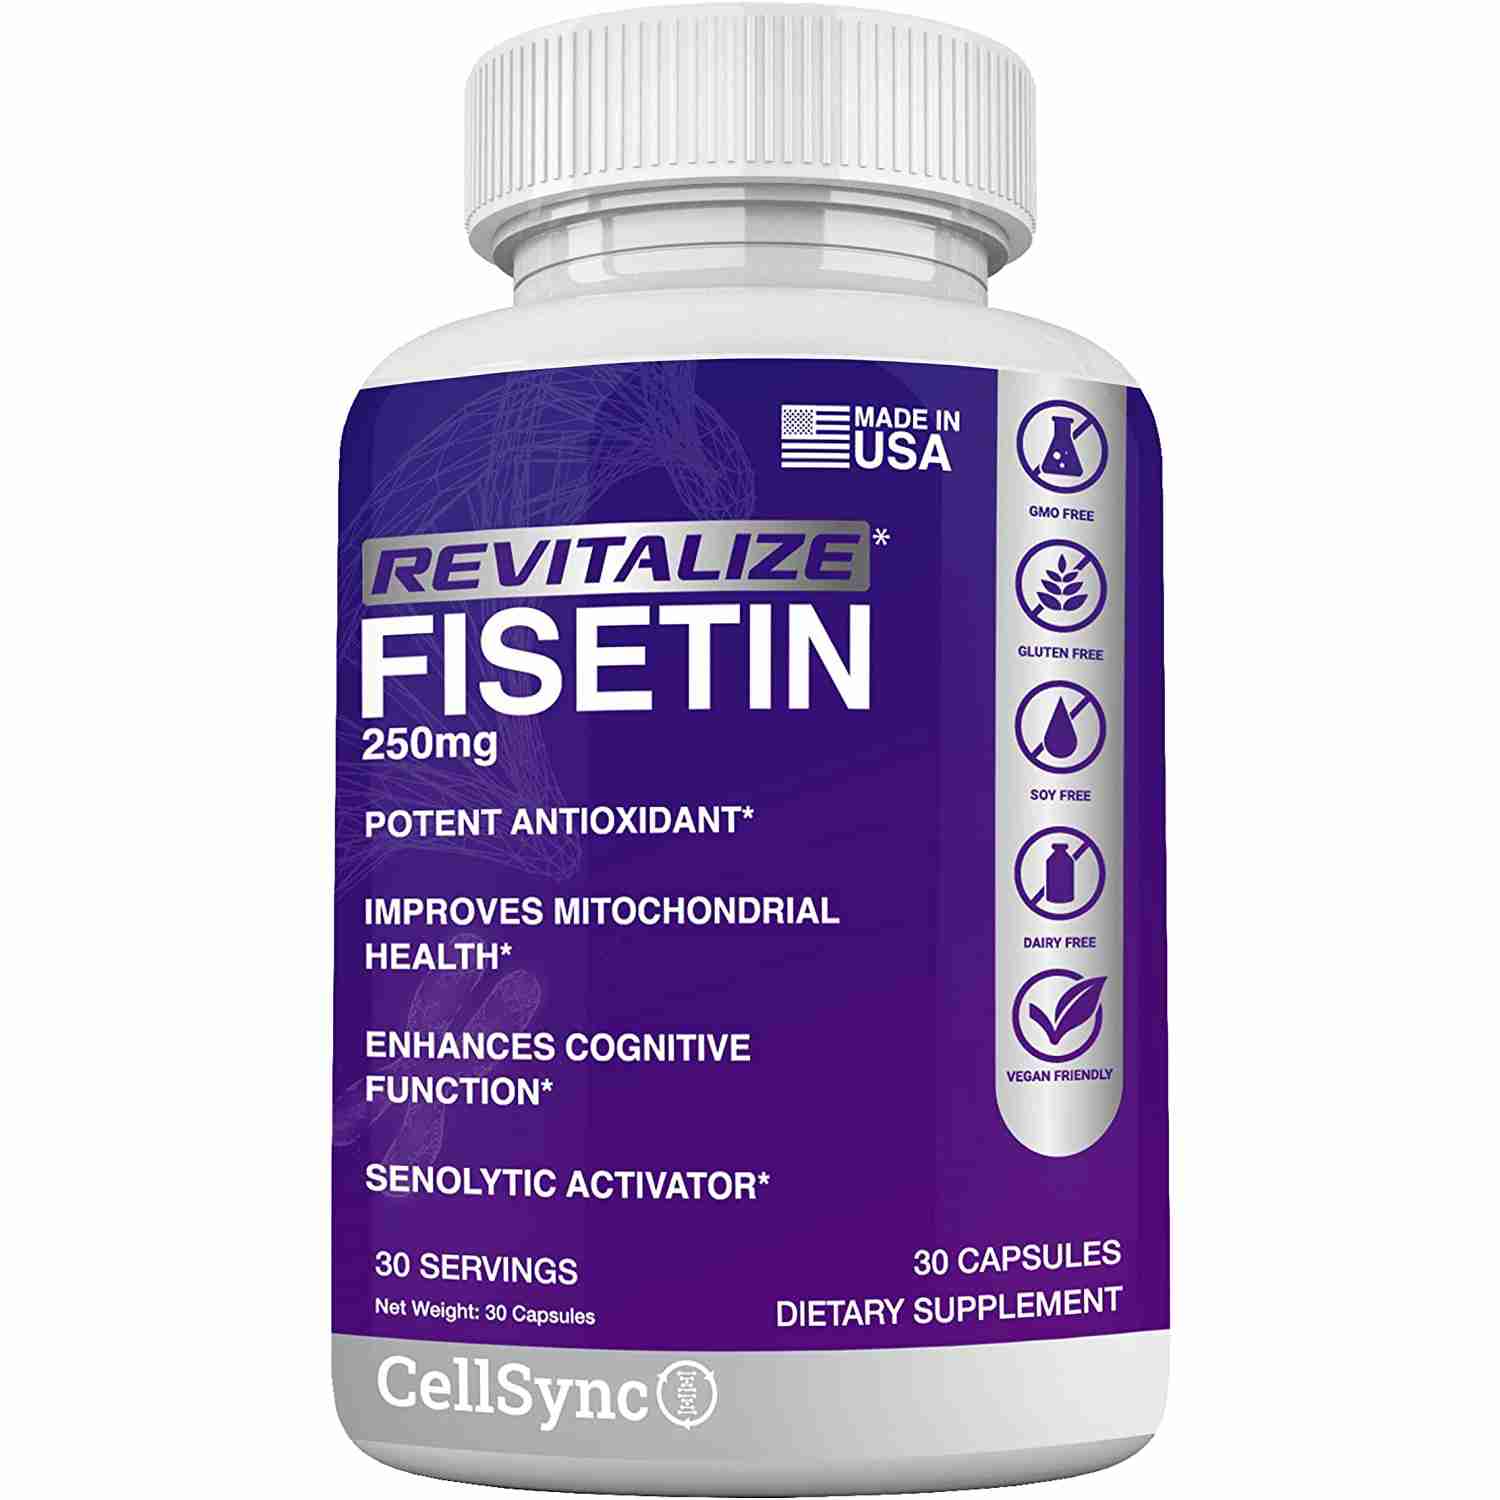 fisetin-brain-health-energy-support-vitamin-supplement-skin with cash back rebate